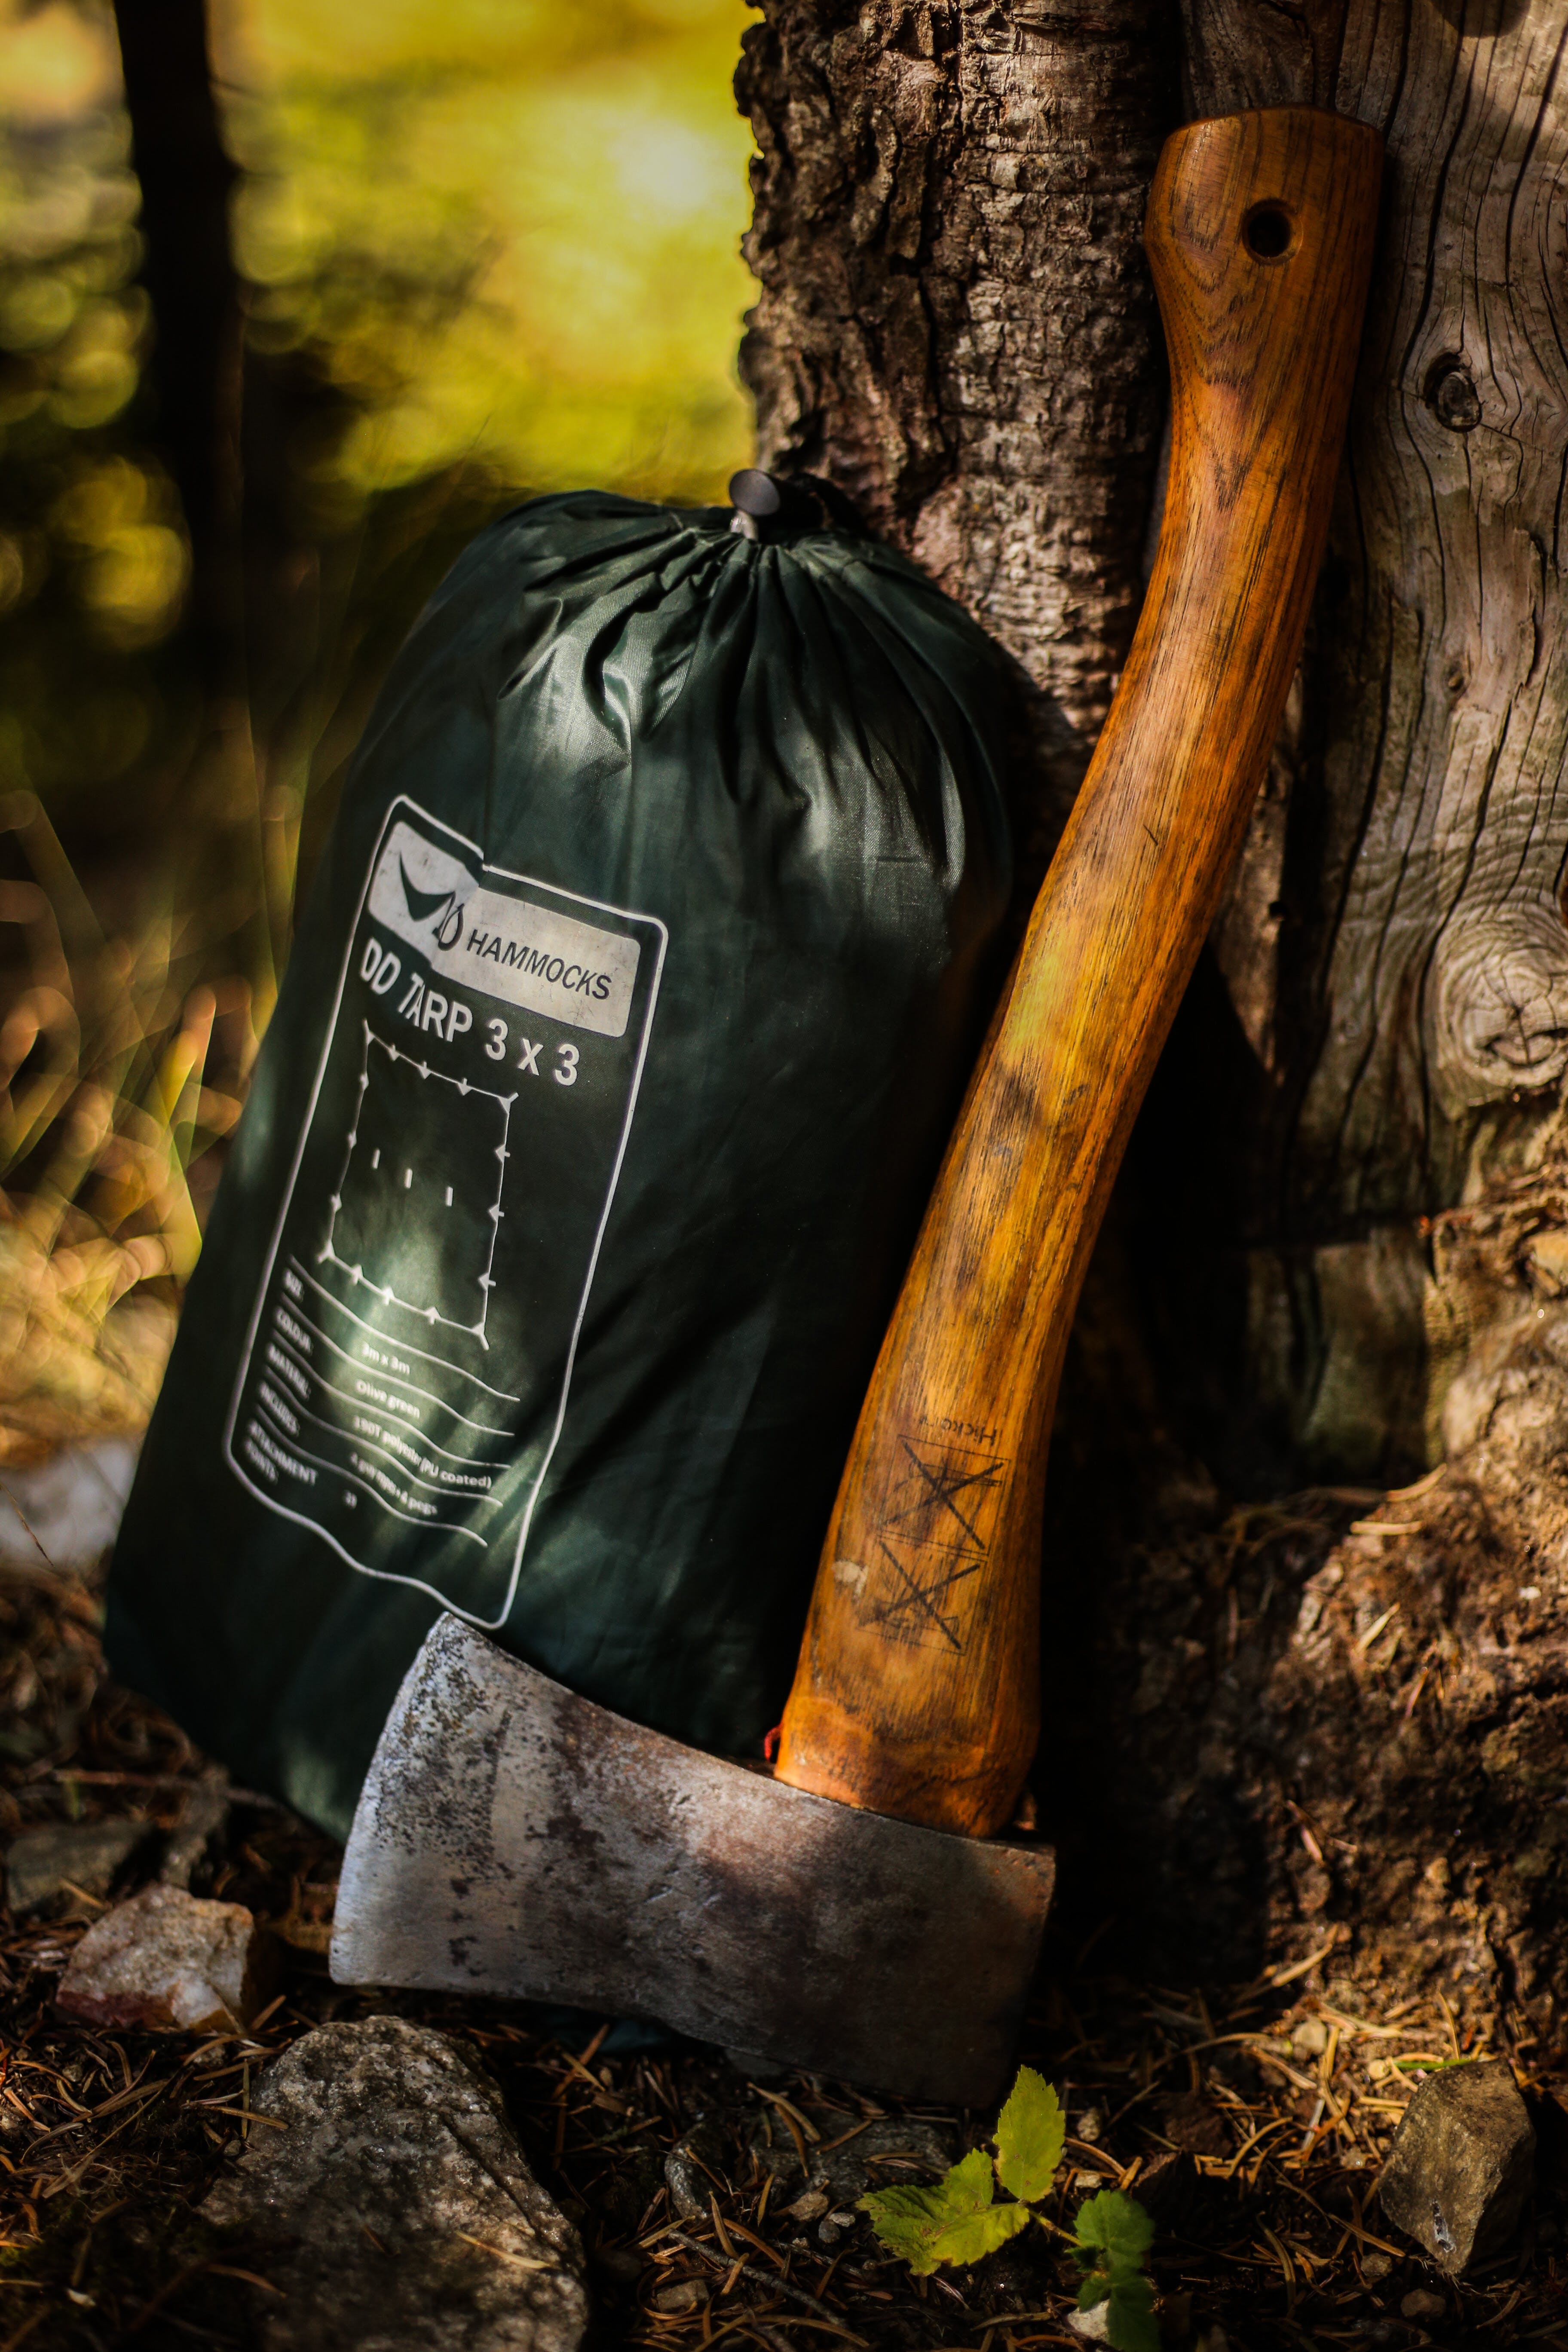 Ax and duffel bag near a tree